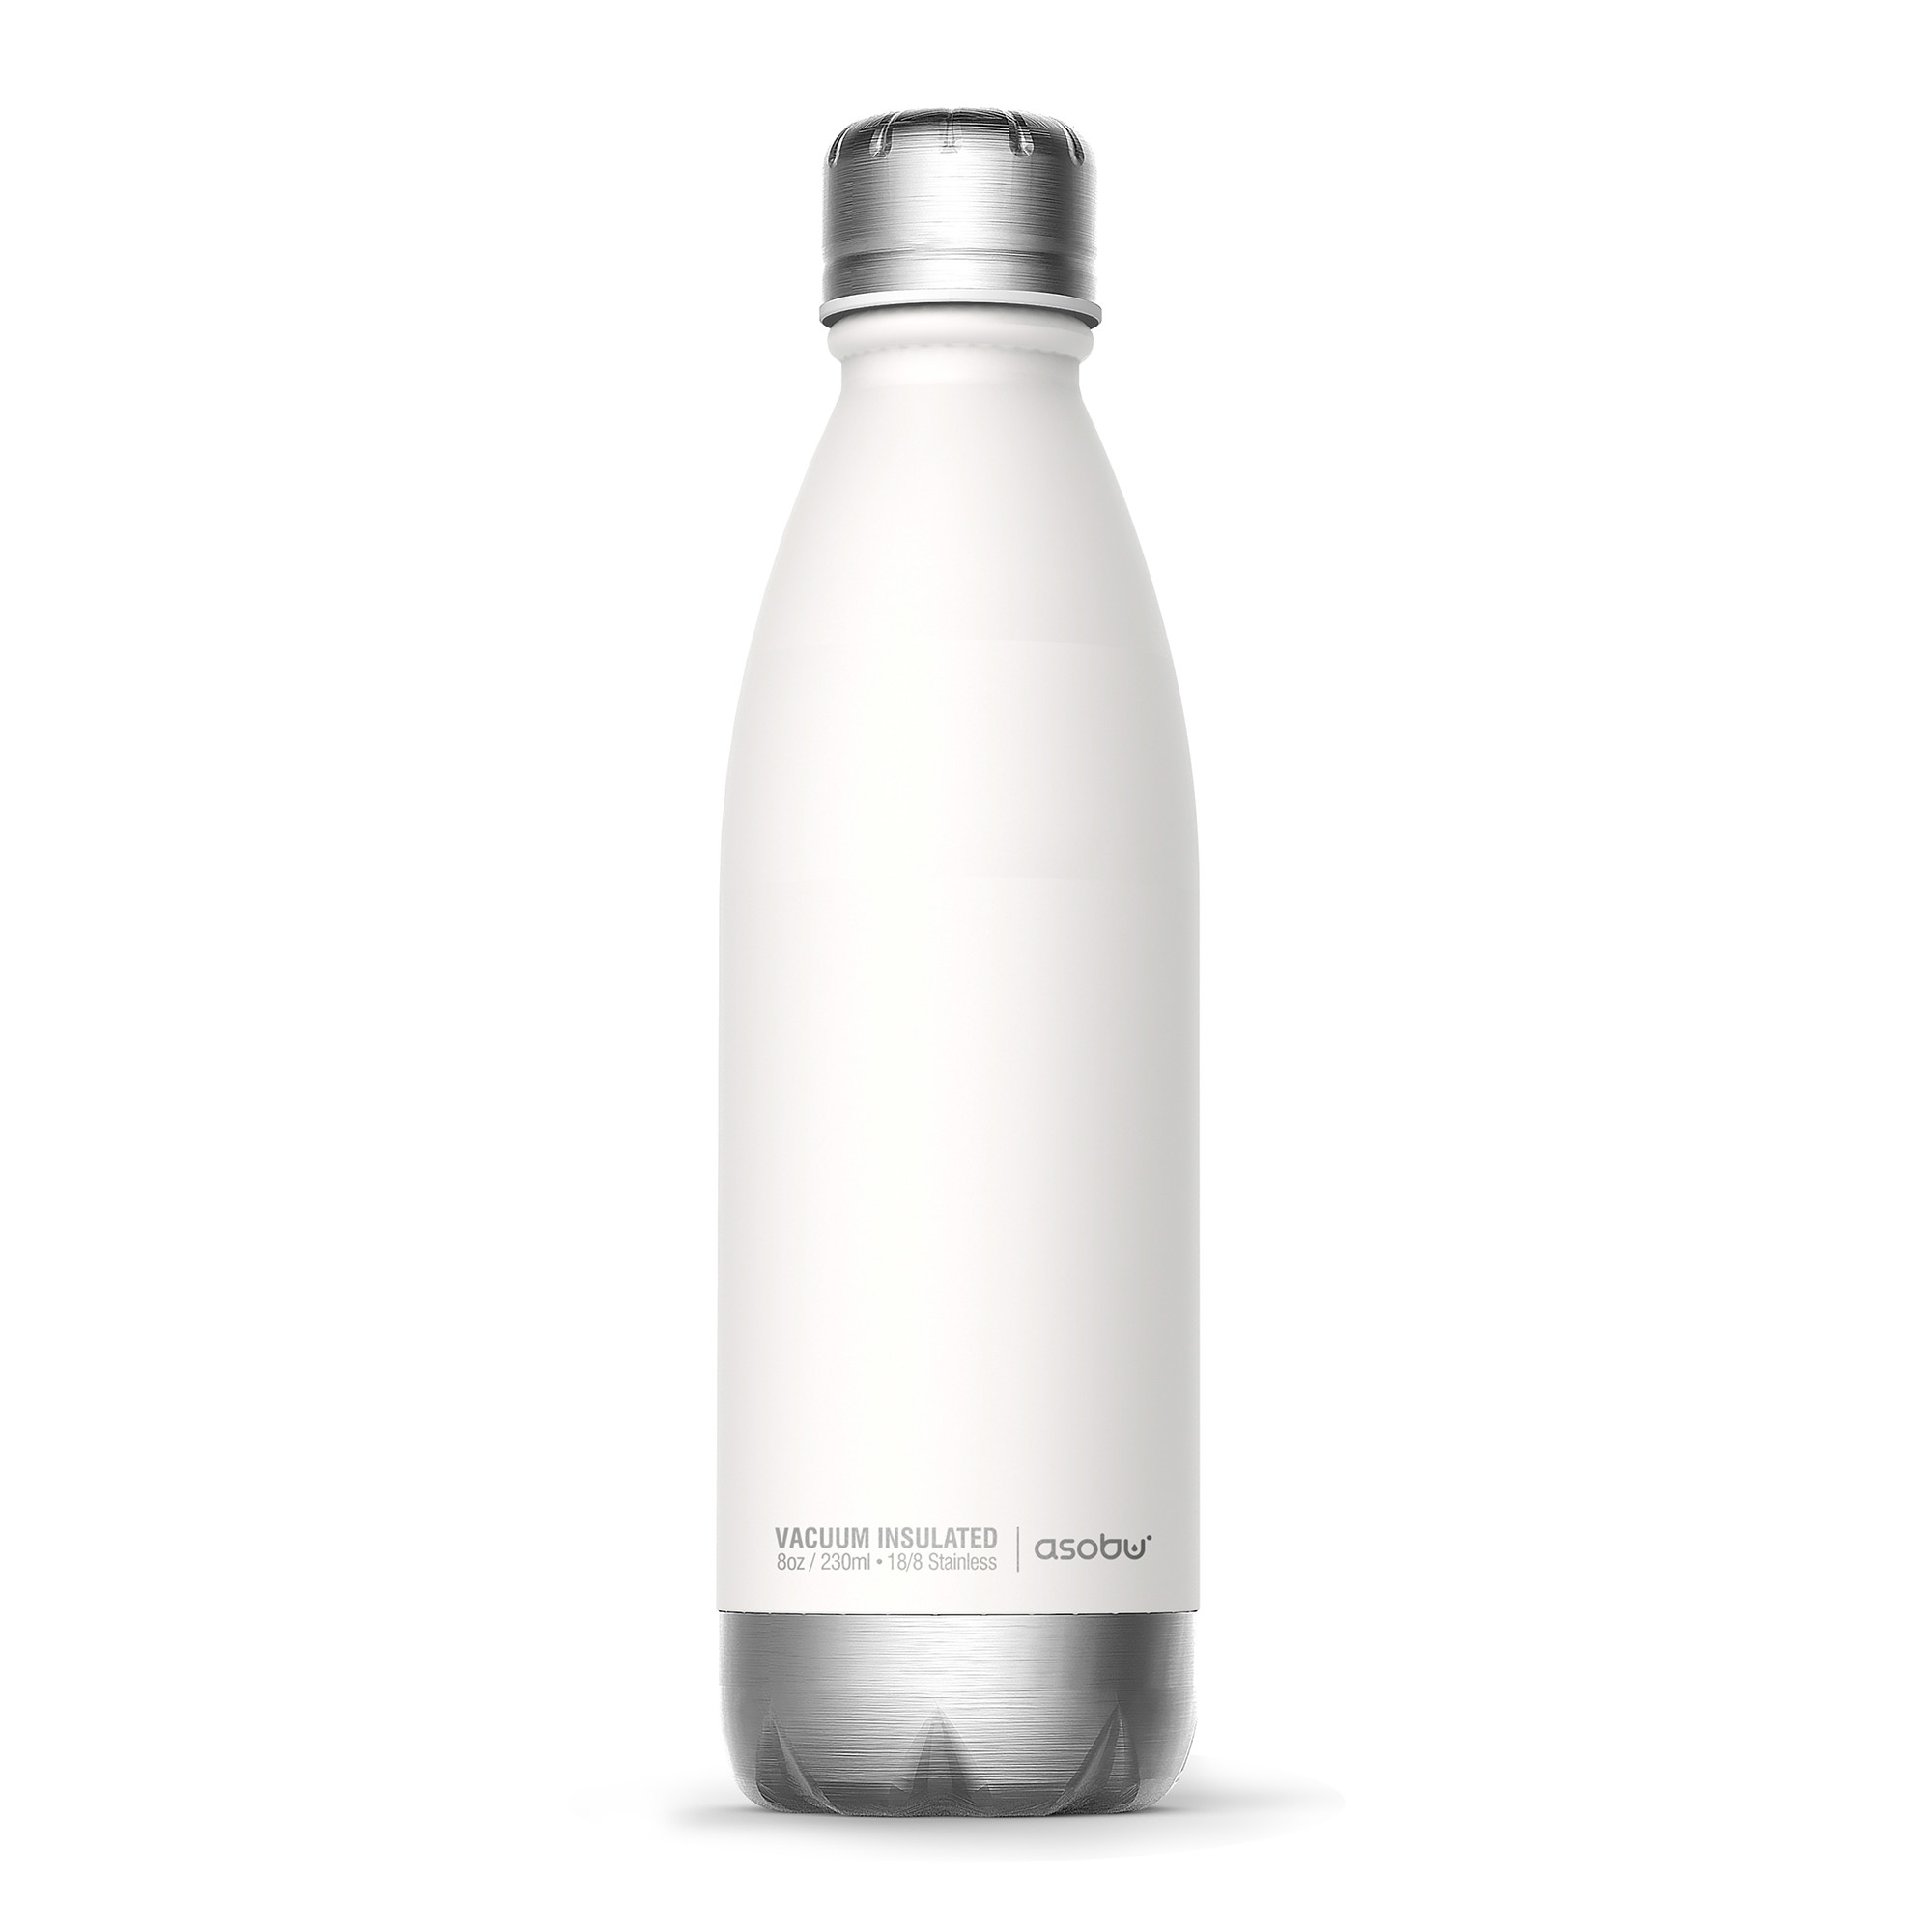 https://www.hansonellis.com/mm5/graphics/00000001/engraved-white-stainless-steel-insulated-cold-hot-water-bottle22-aso-20r25.jpg